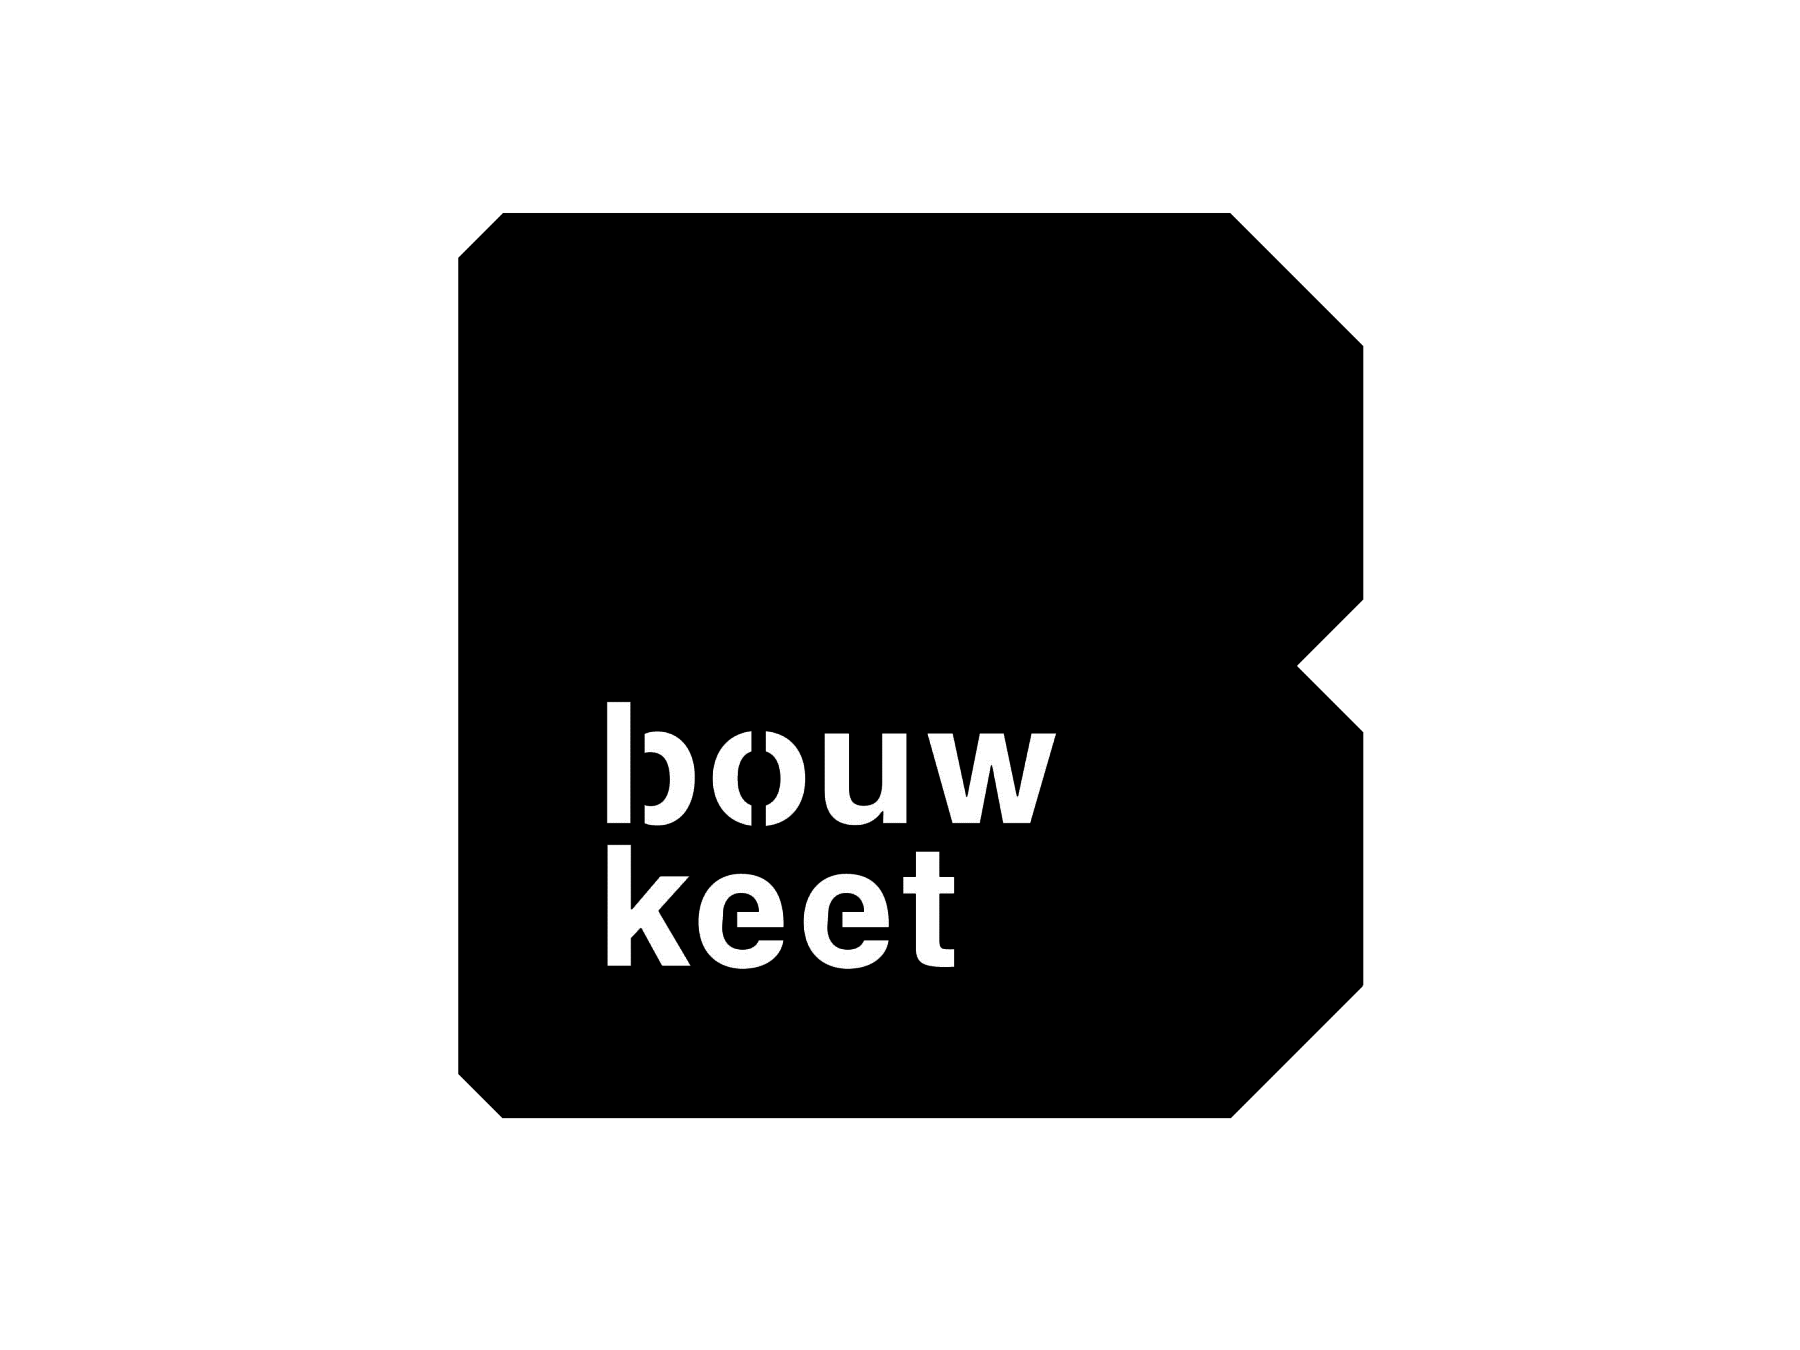 Bouwkeet